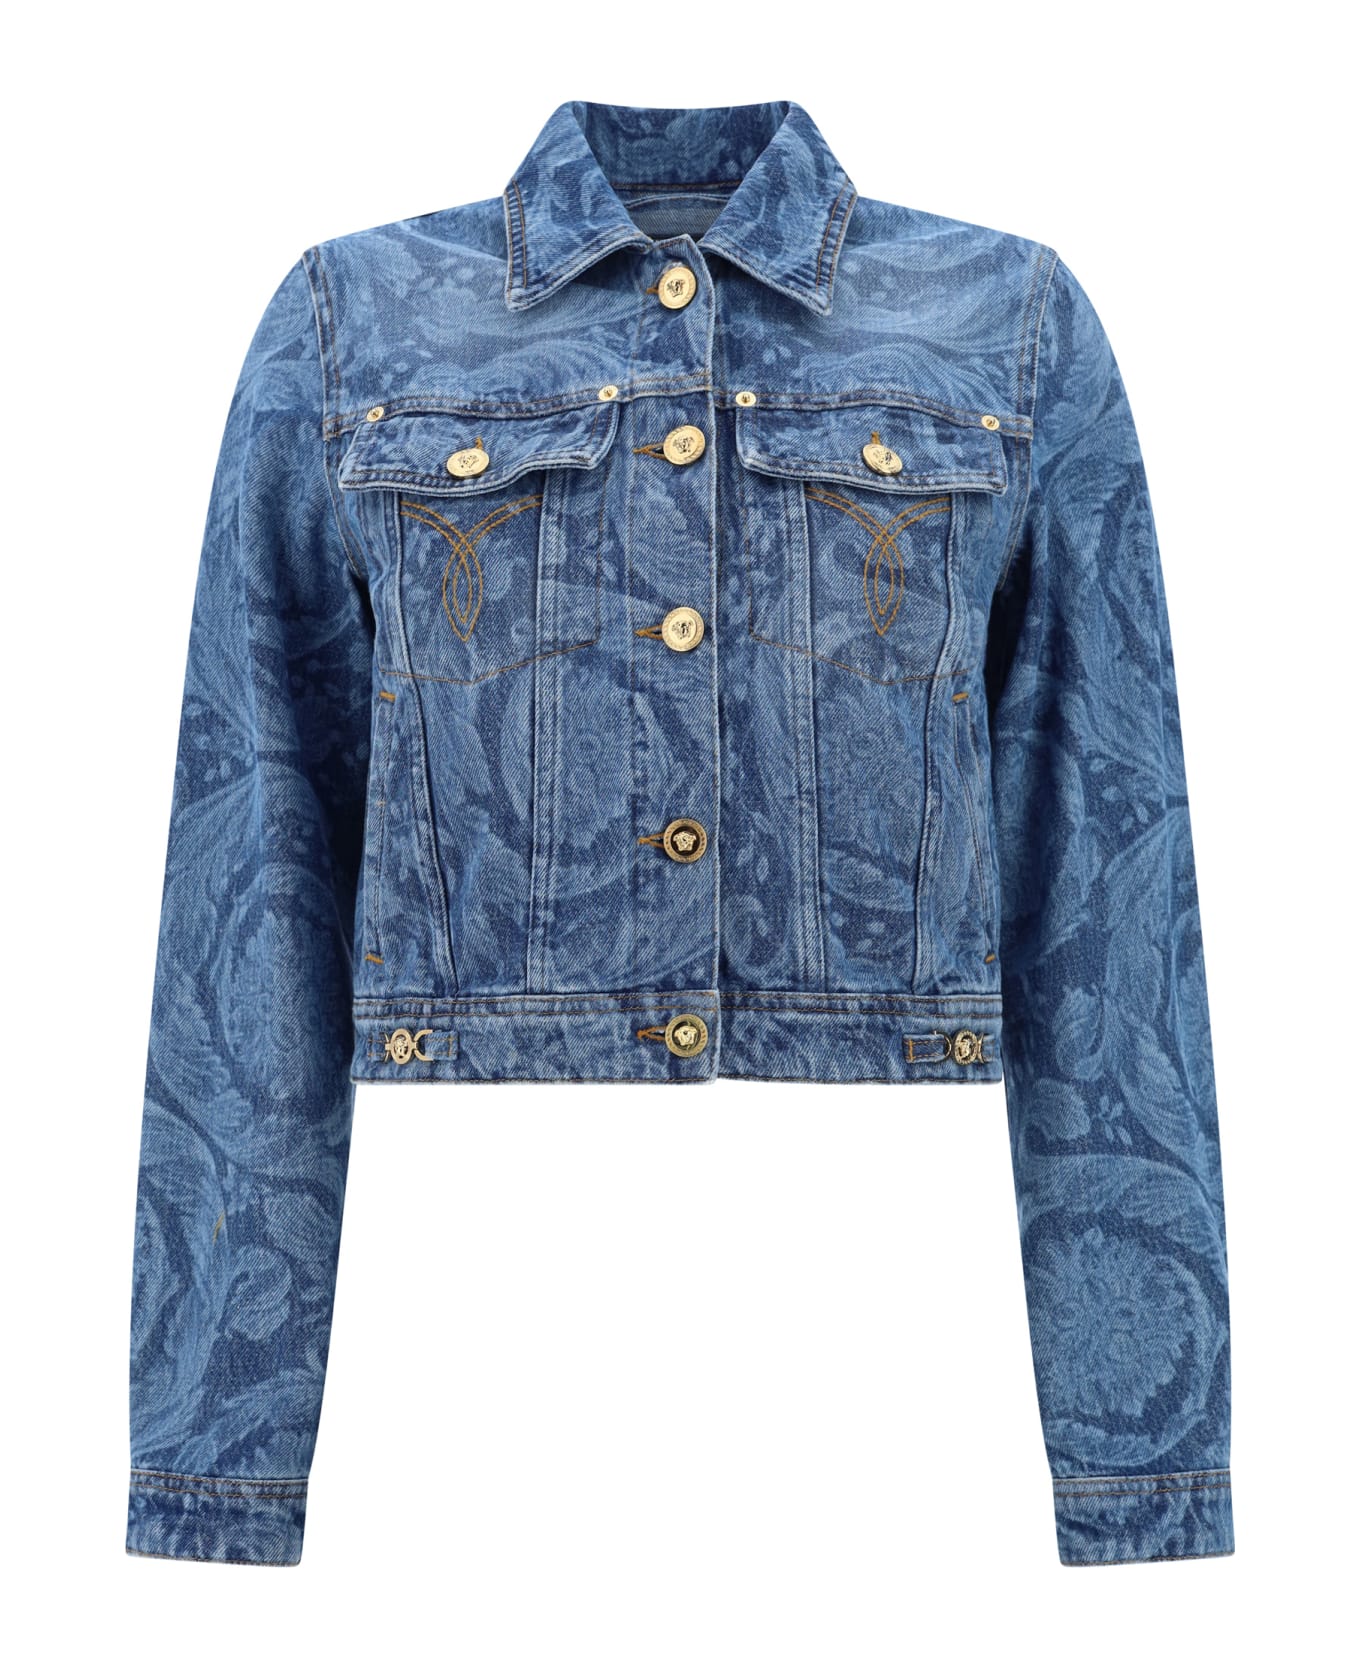 Versace Slim Fit Denim Jacket - Medium Blue